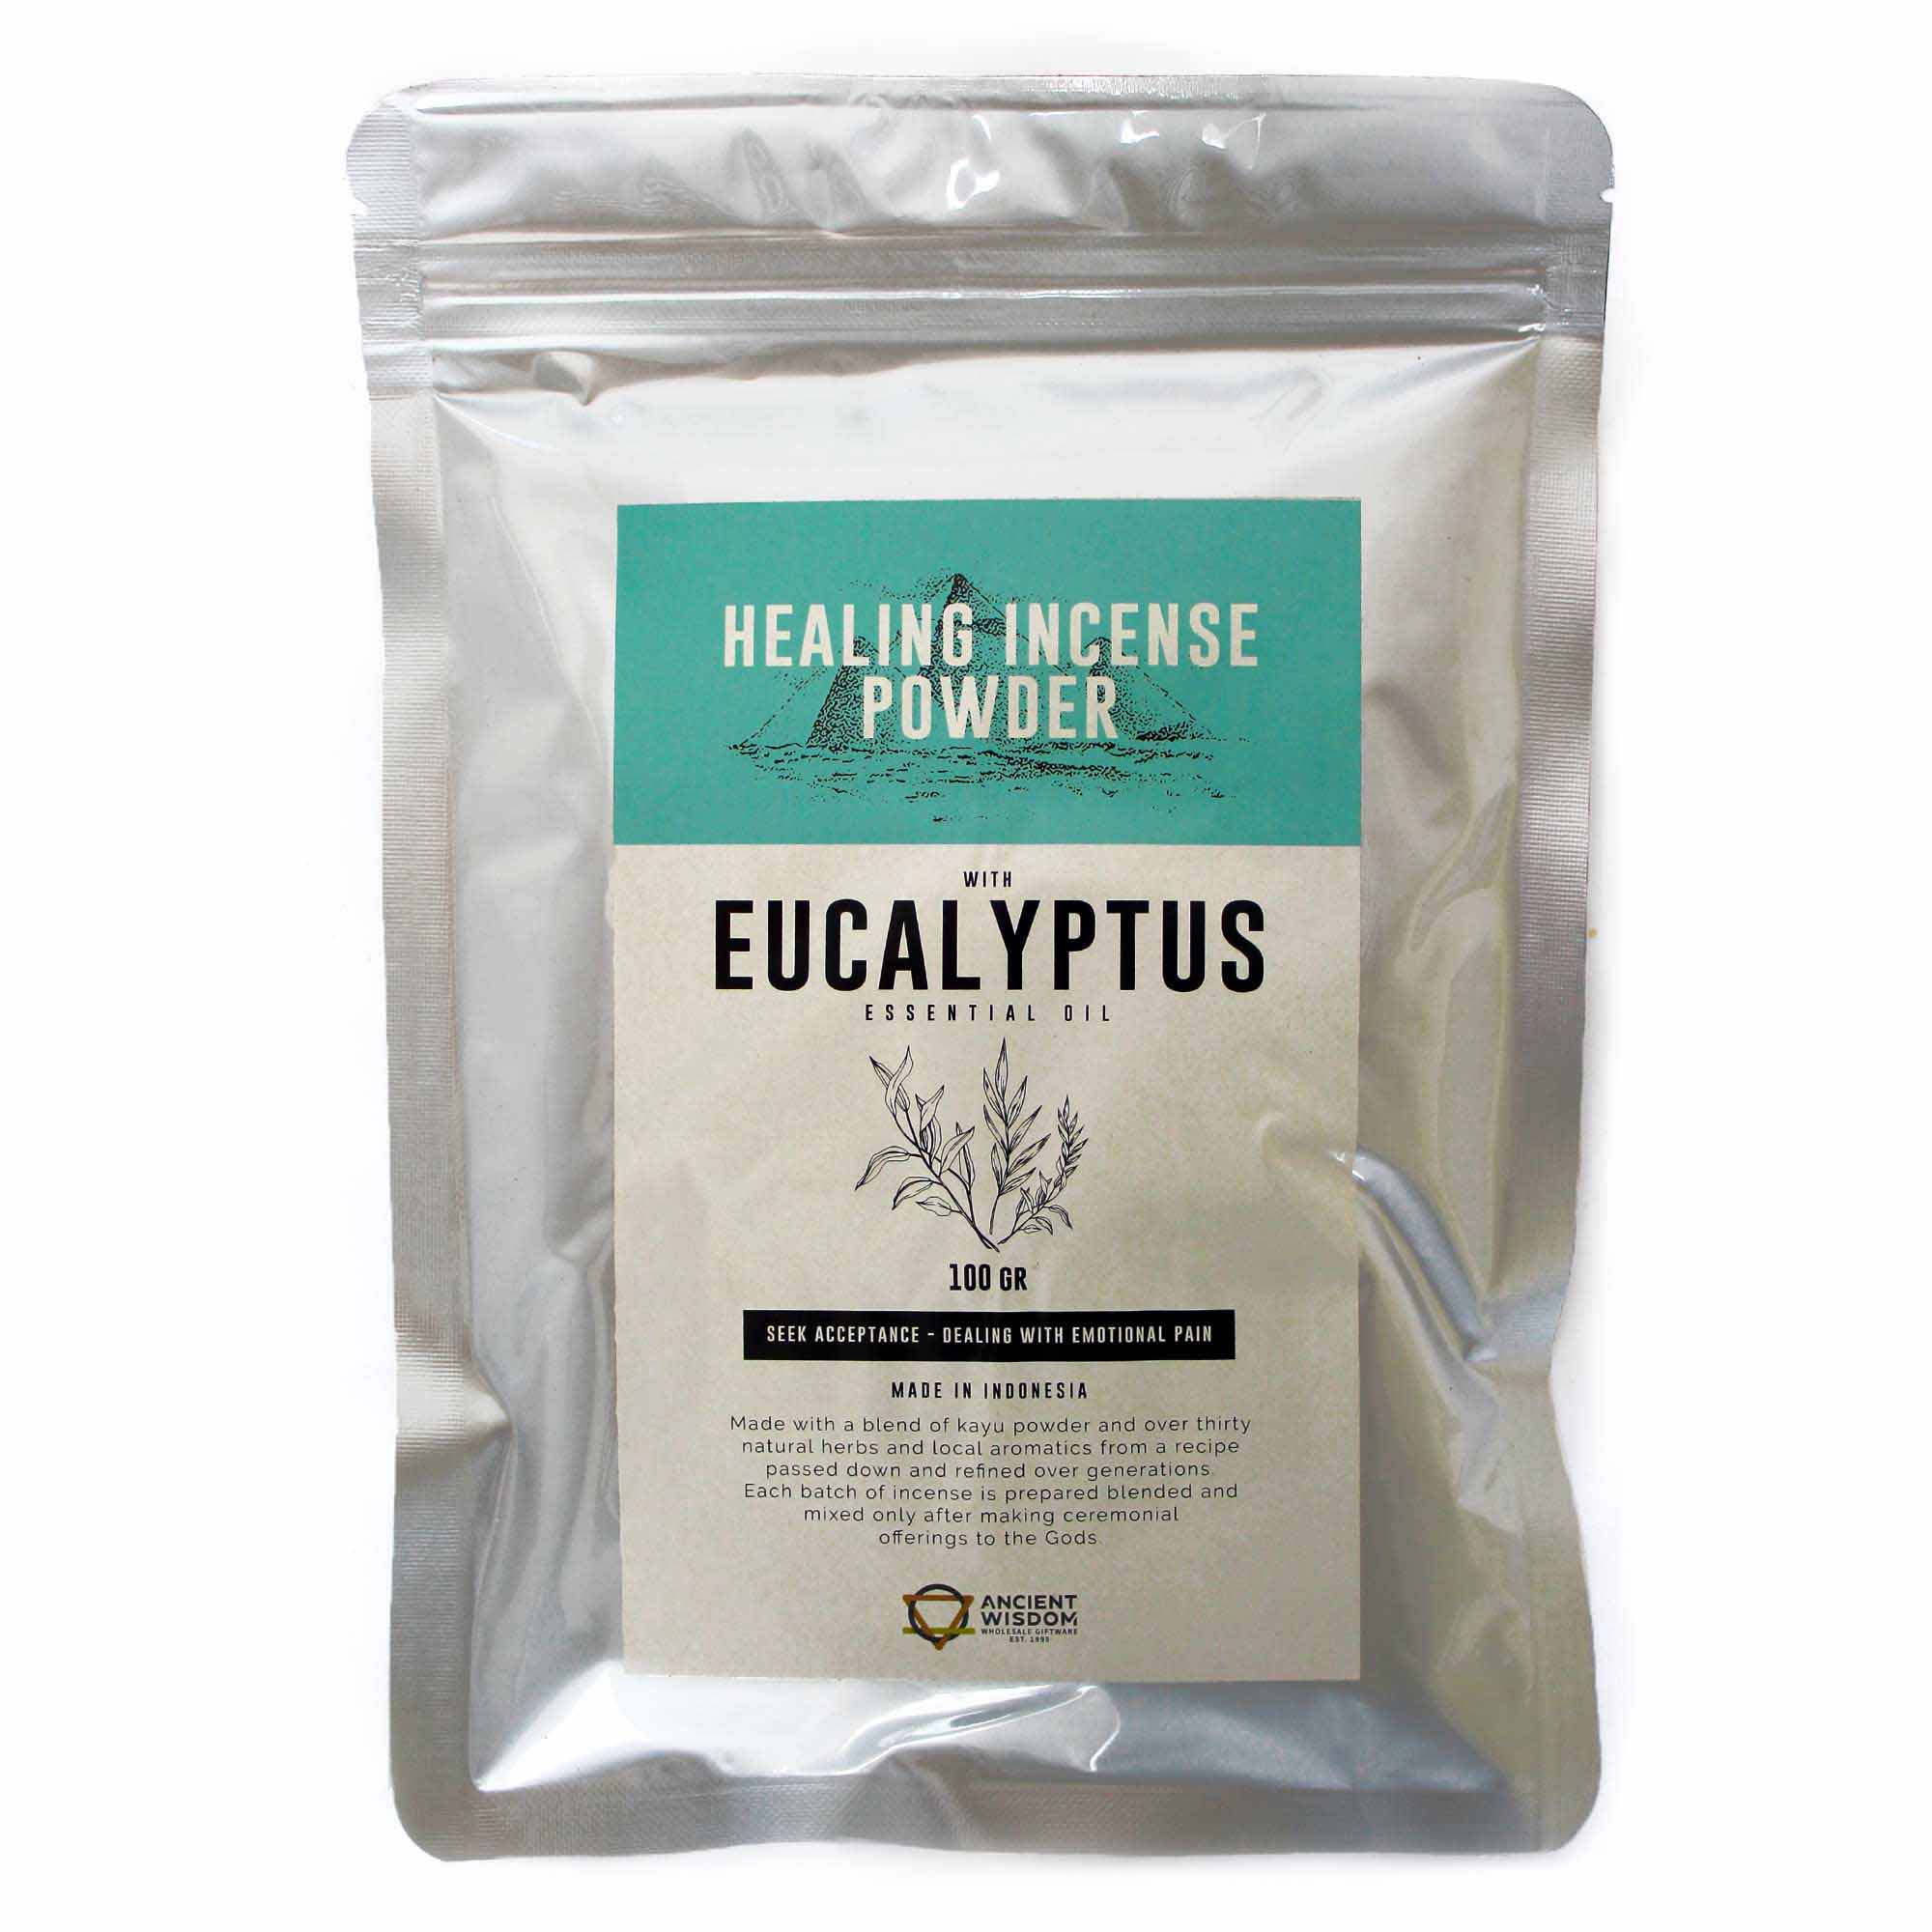 View Healing Incense Powder Eucalyptus 100gm information